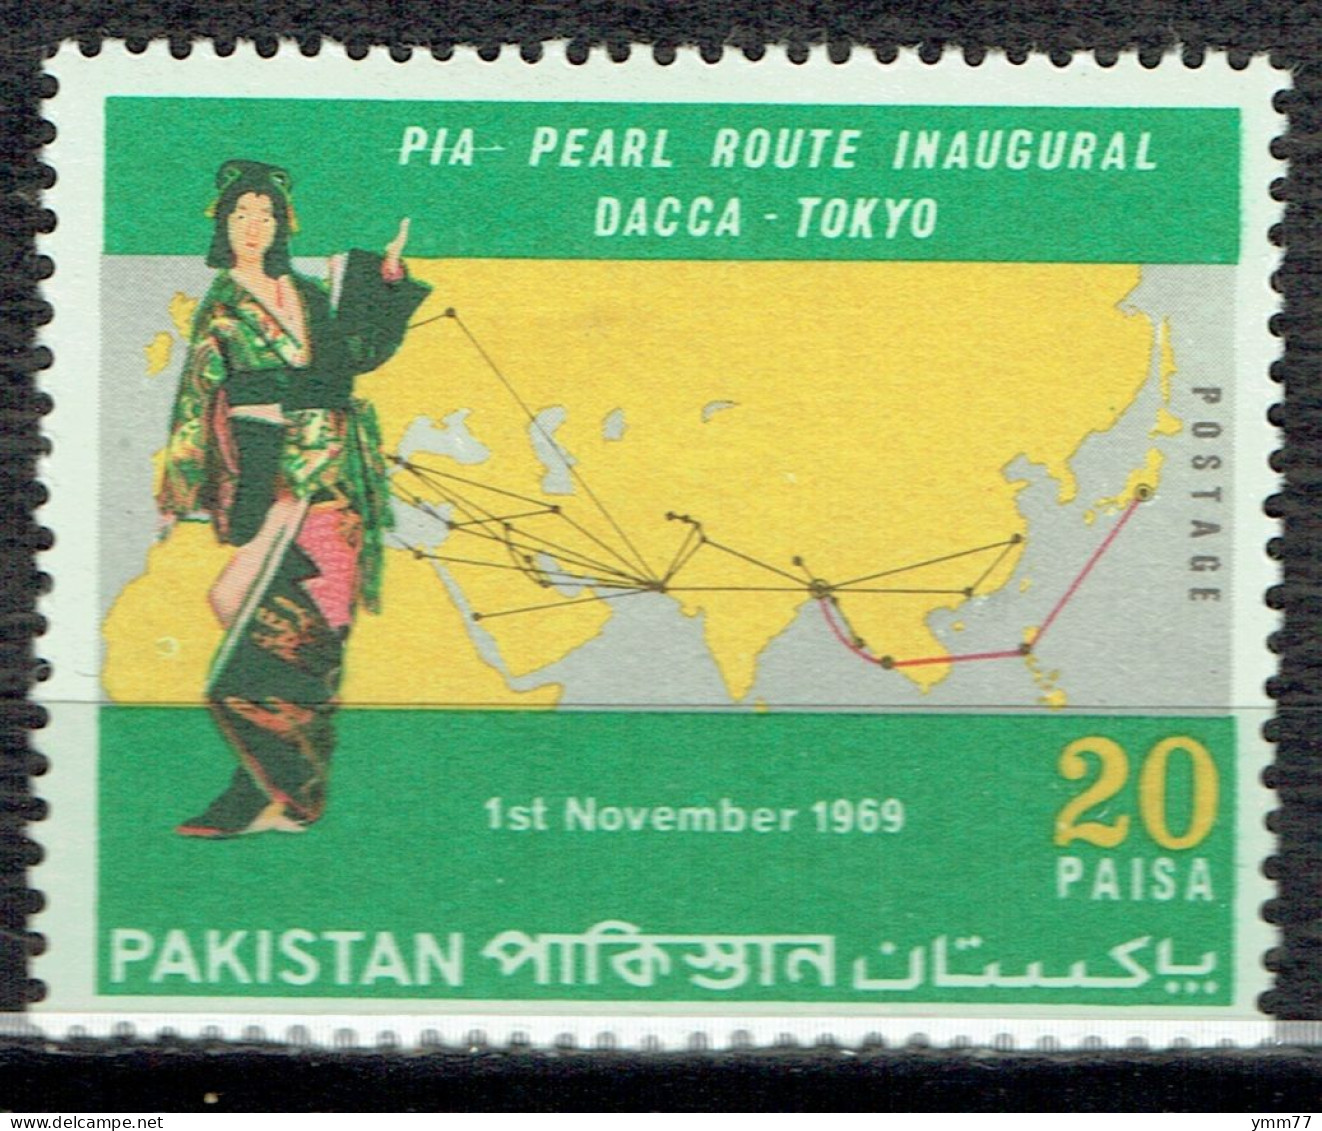 Inauguration De La Ligne Aérienne Dacca - Tokyo - Pakistan